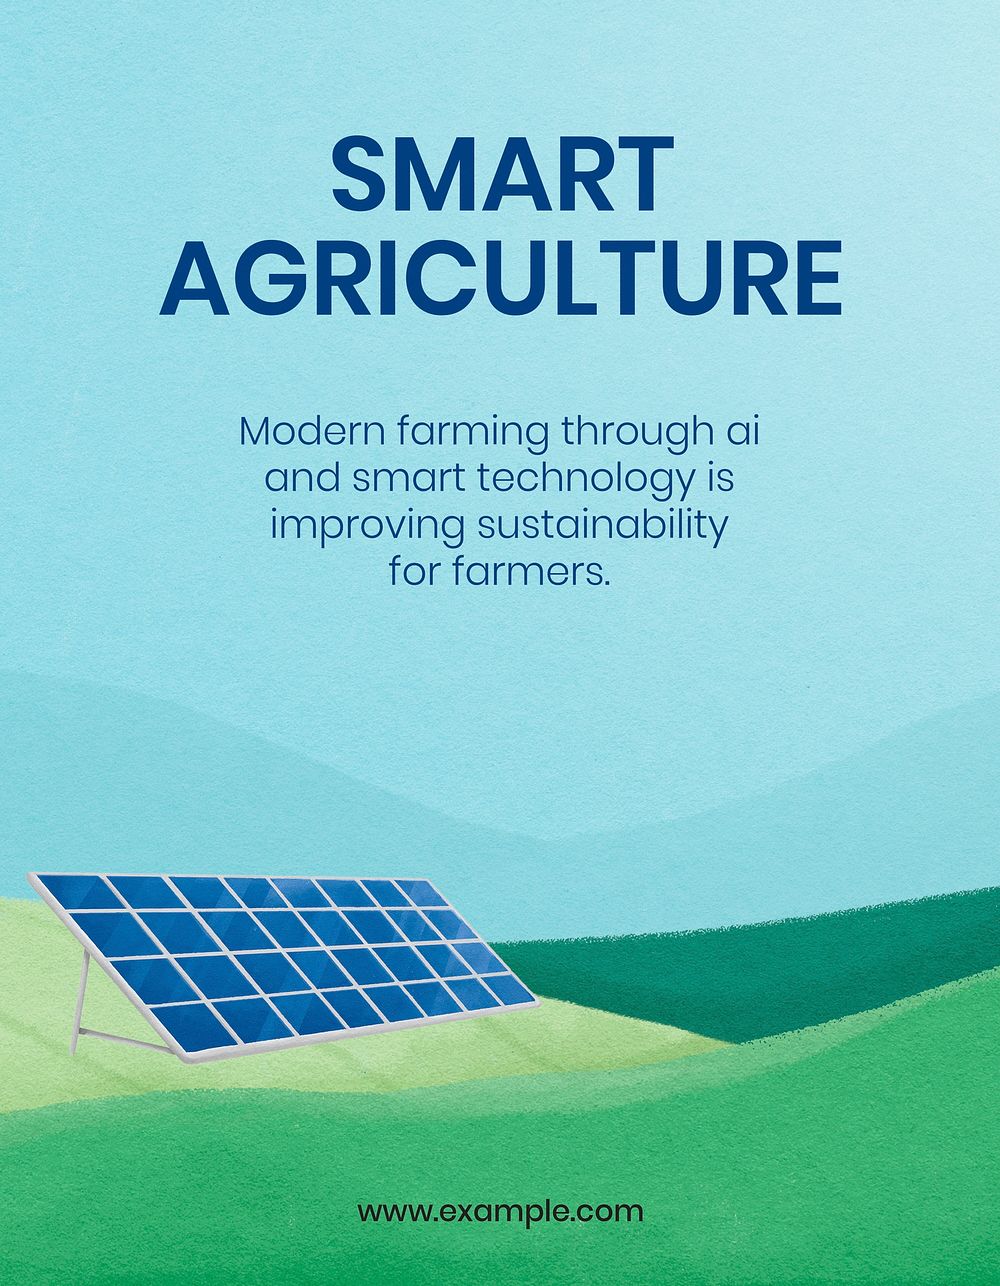 Smart agriculture flyer template, solar panel illustration psd